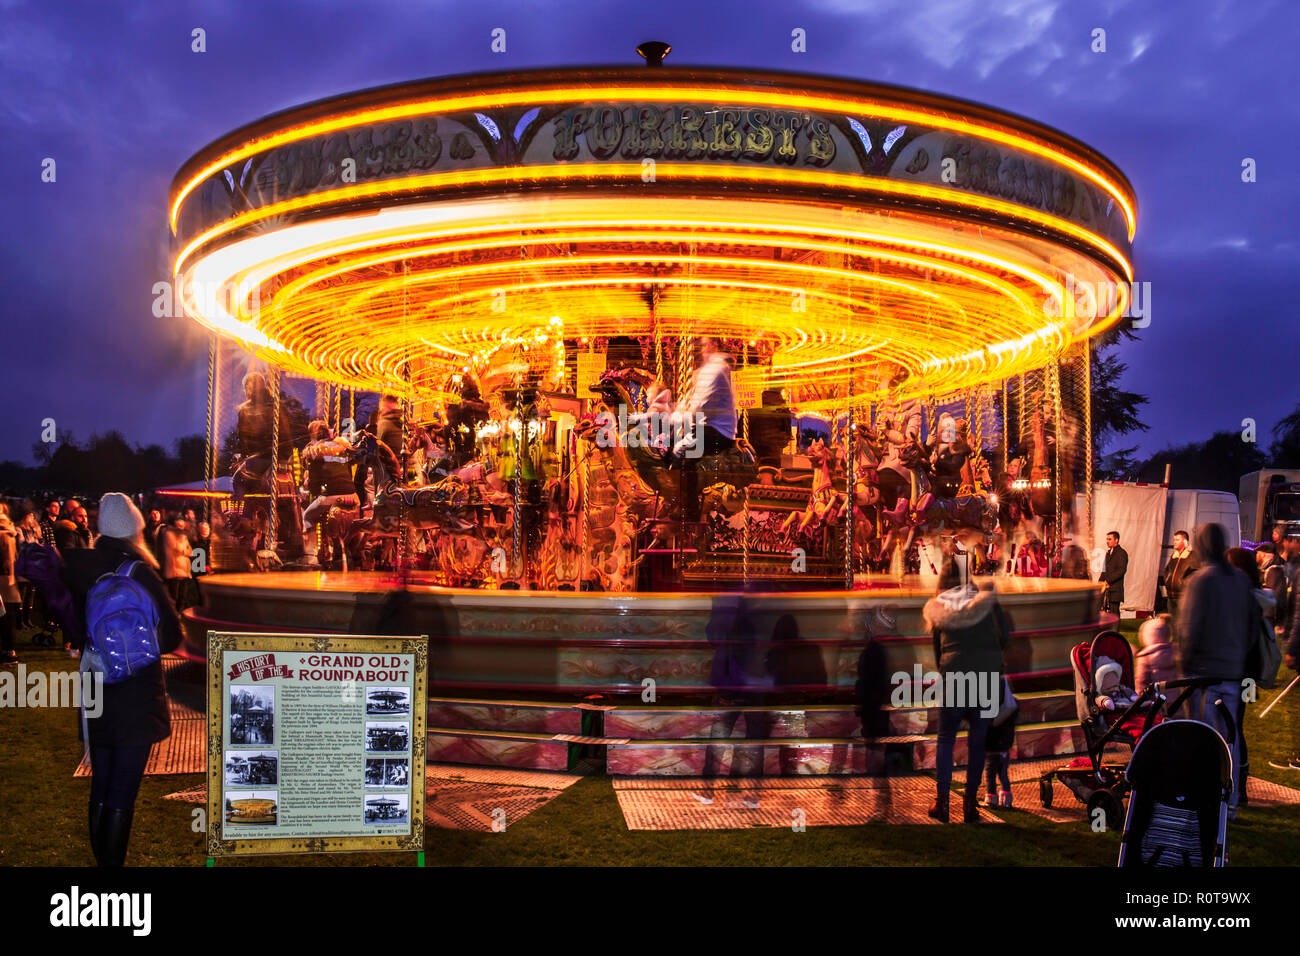 Carrusel rotonda, o merry go round en una feria. Foto de stock